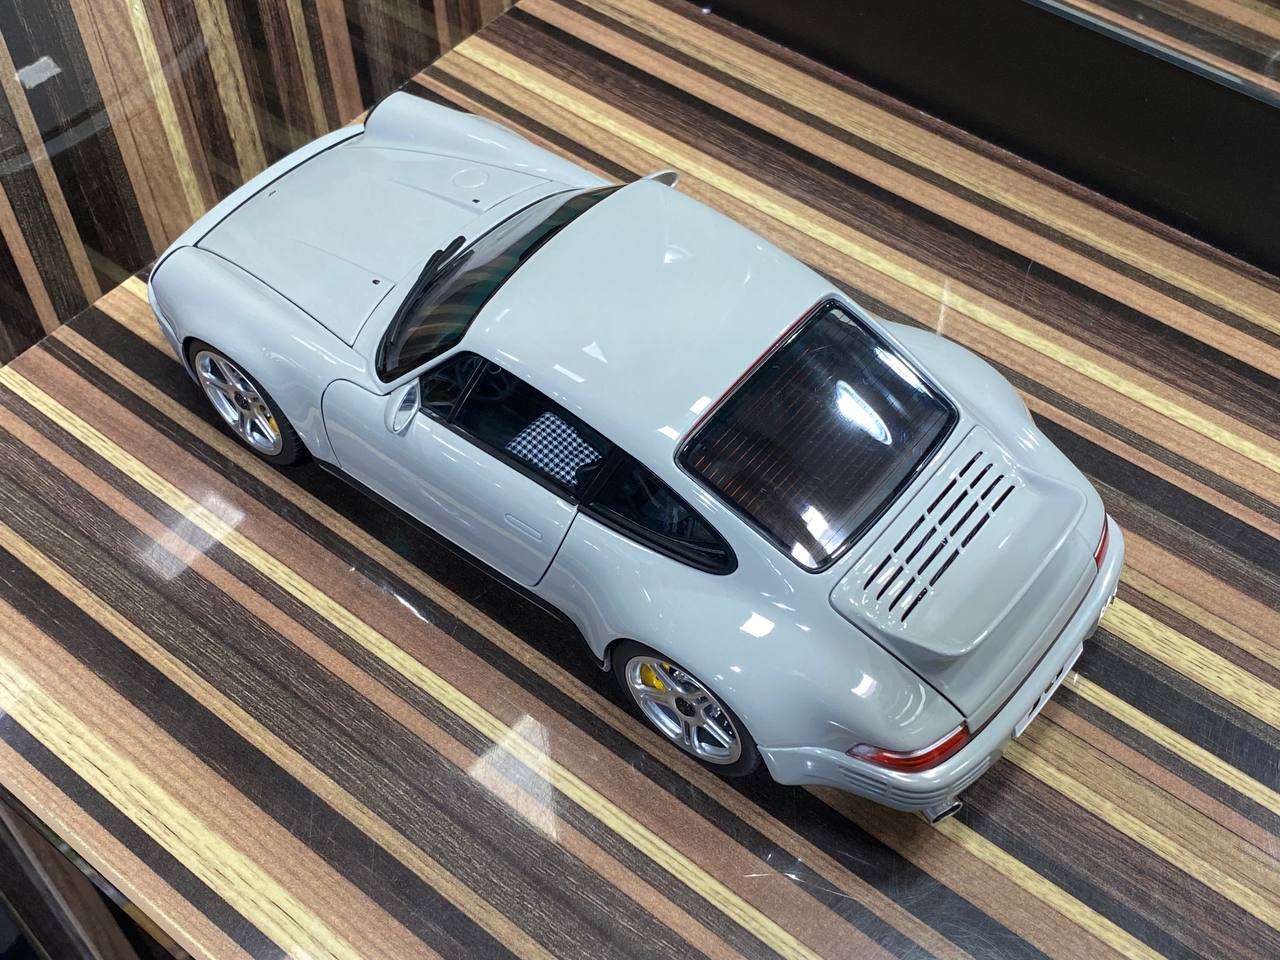 1/18 Diecast  Porsche RUF SCR Chalk Grey Almost Real Scale Model Car|Sold in Dturman.com Dubai UAE.